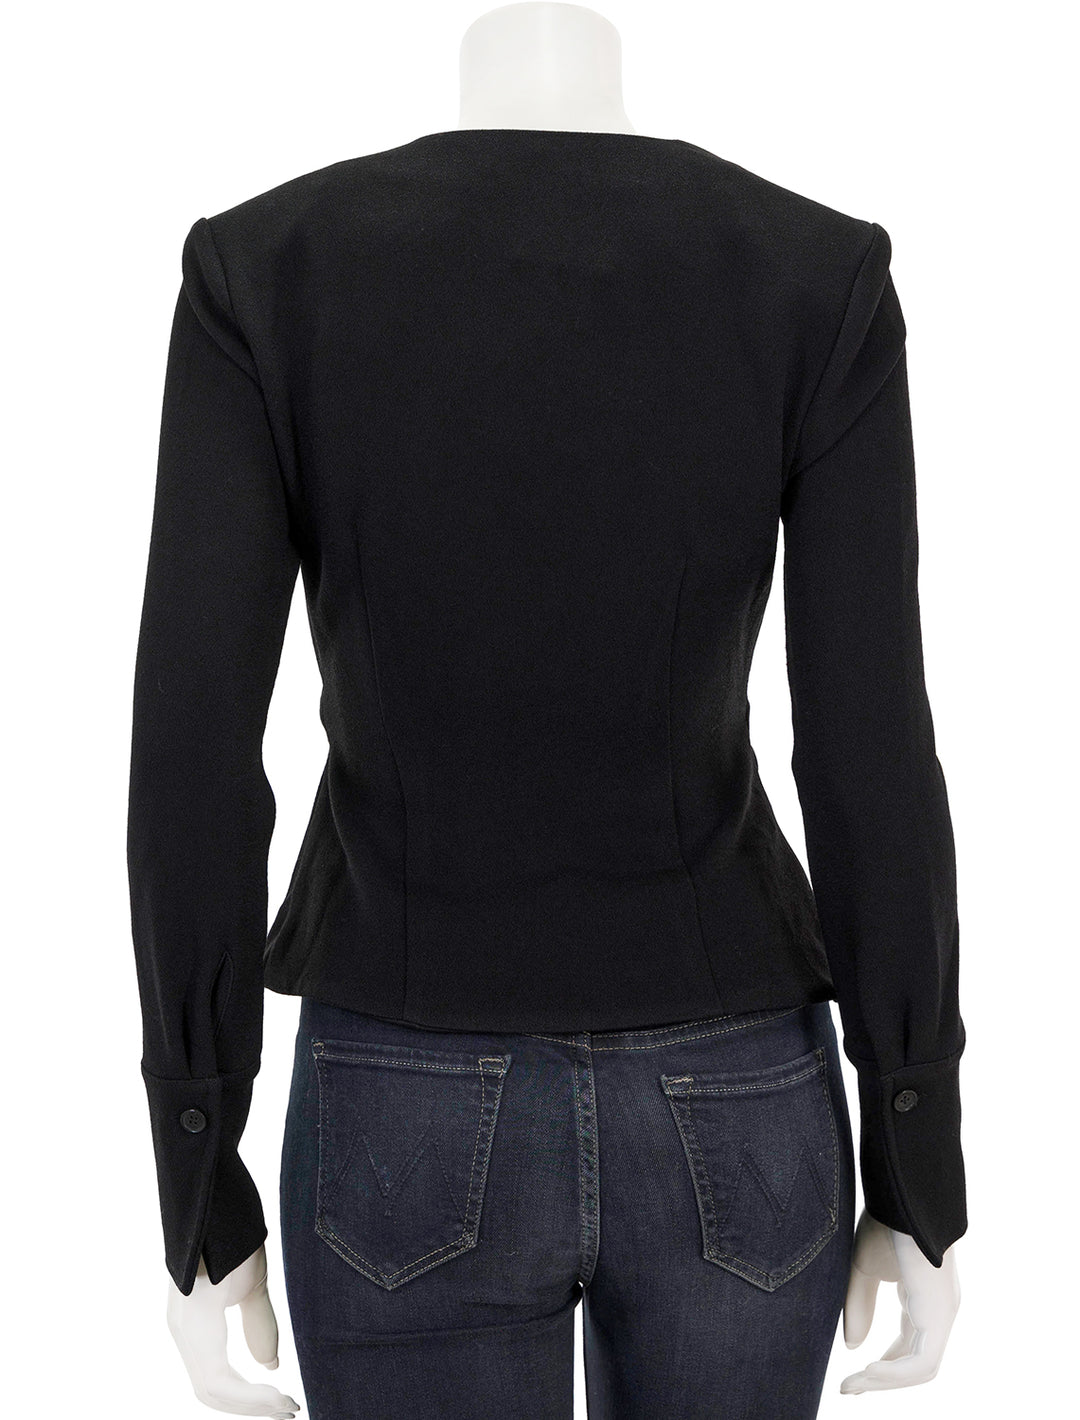 Back view of Anine Bing's joey top in black.